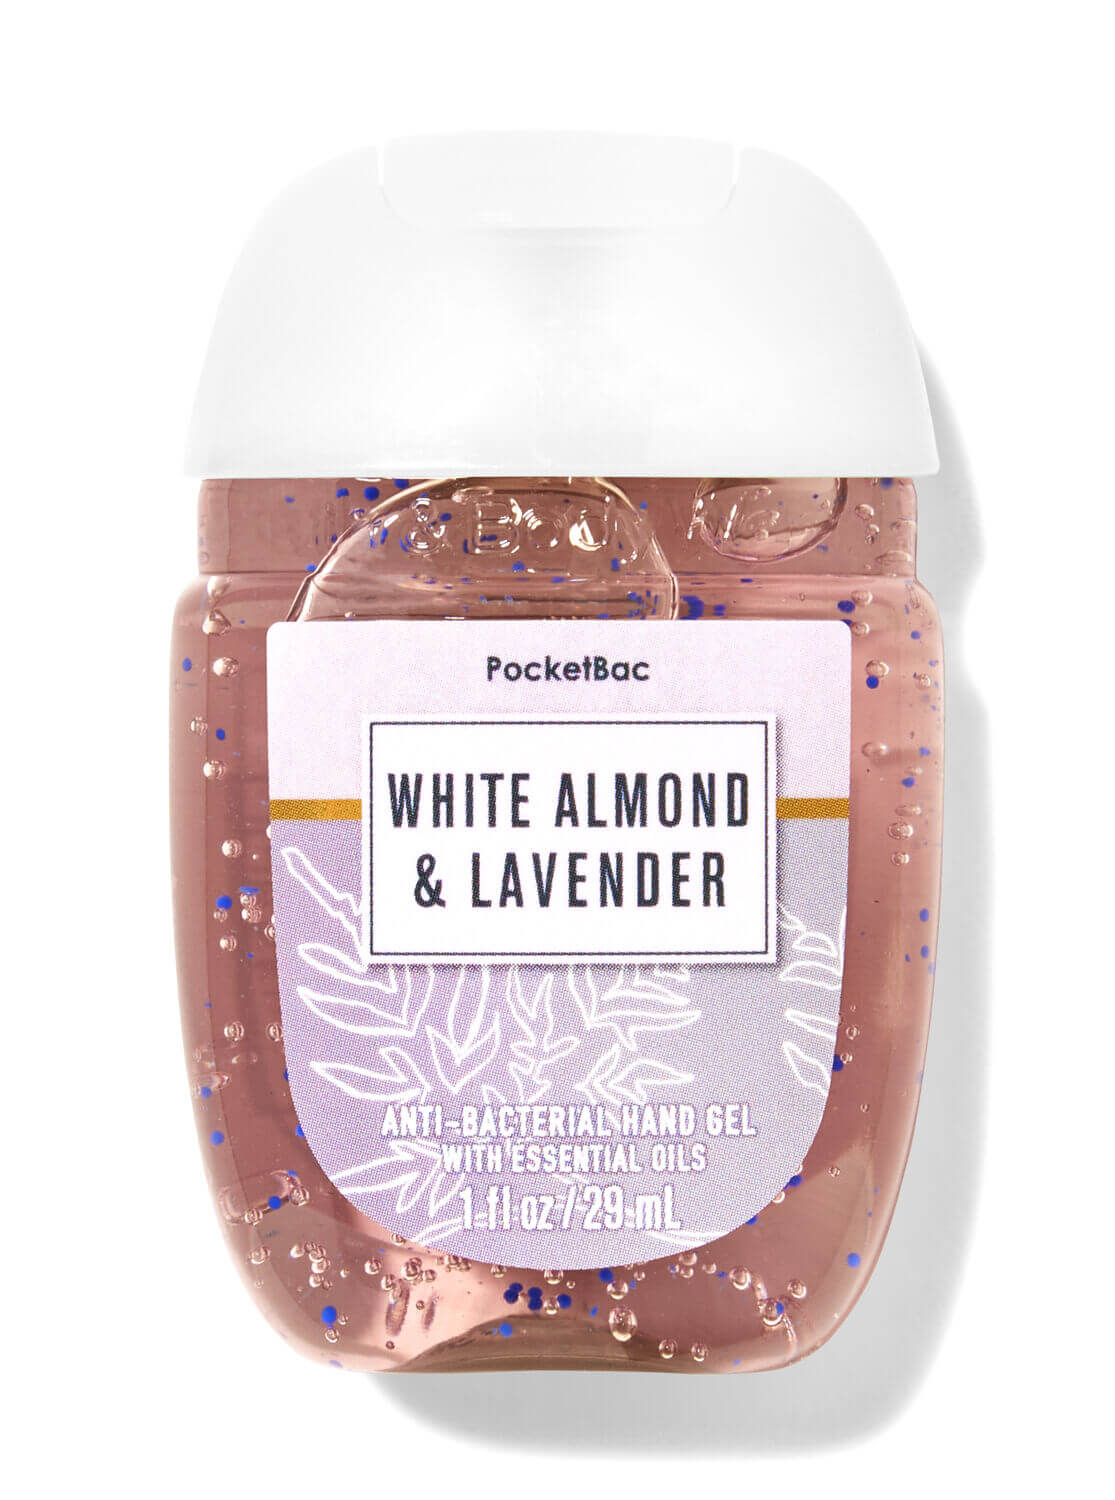 Bath & Body Works White Almond & Lavender PocketBac Hand Sanitizer 29ml